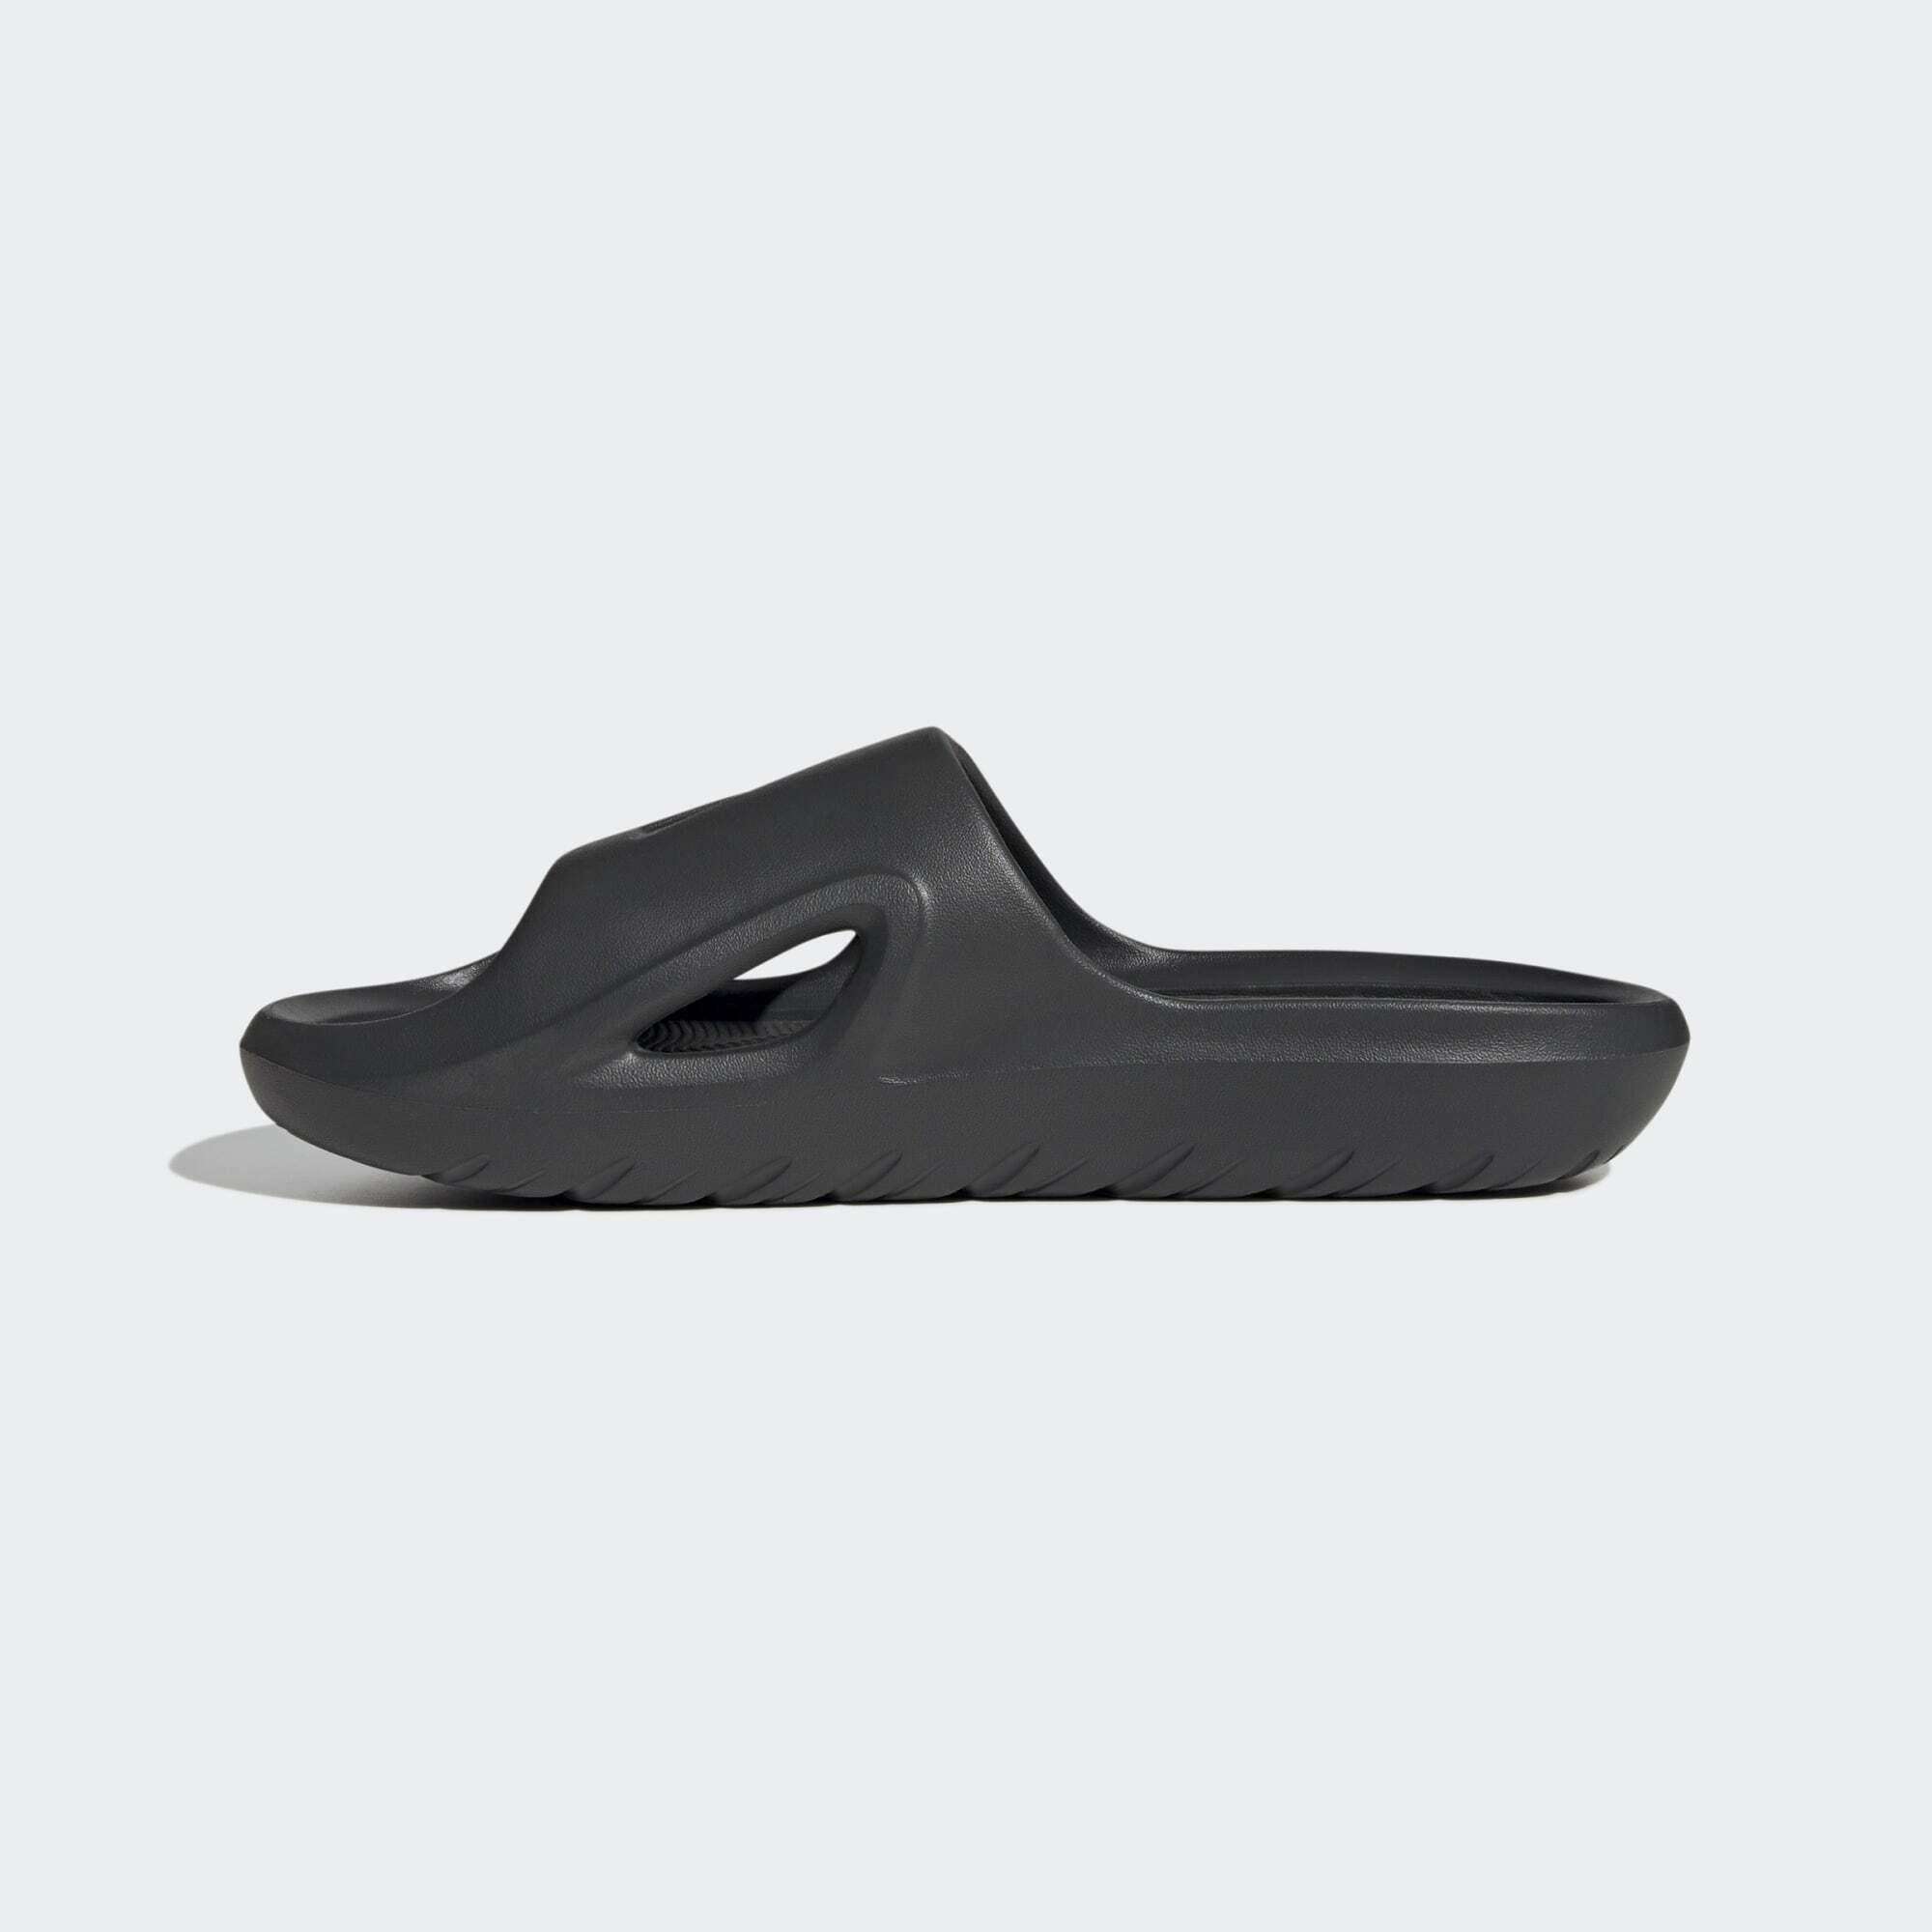 / ADICANE Carbon Sportswear BADESCHLAPPEN Badesandale Black / Core adidas Carbon